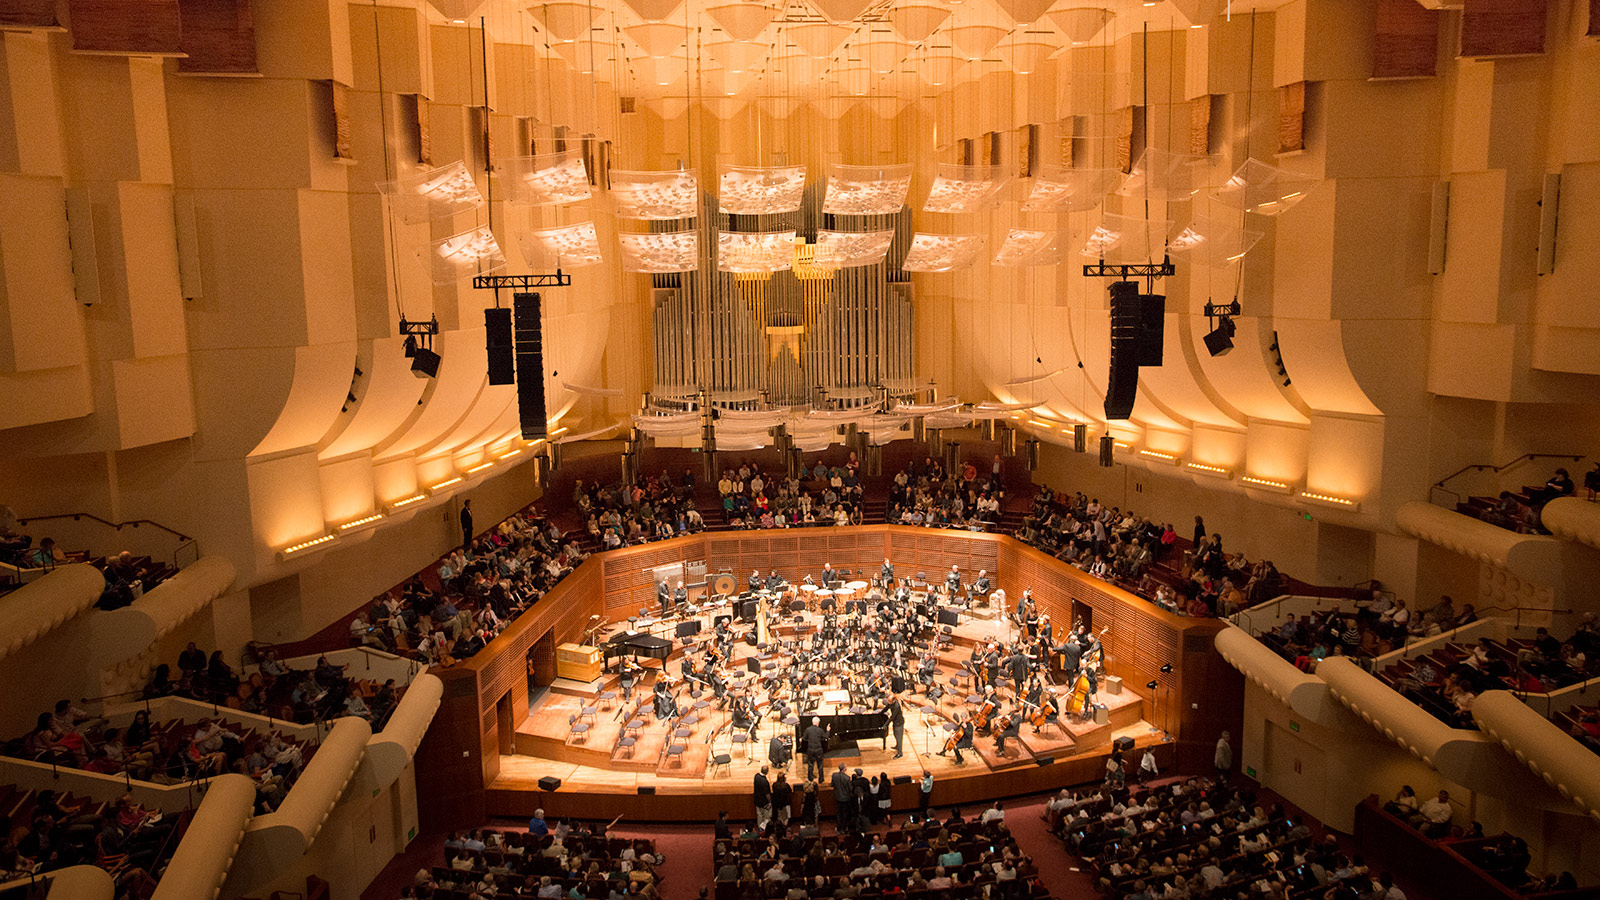 San Francisco's Davies Symphony Hall Chooses Meyer Sound LEOPARD Line Array